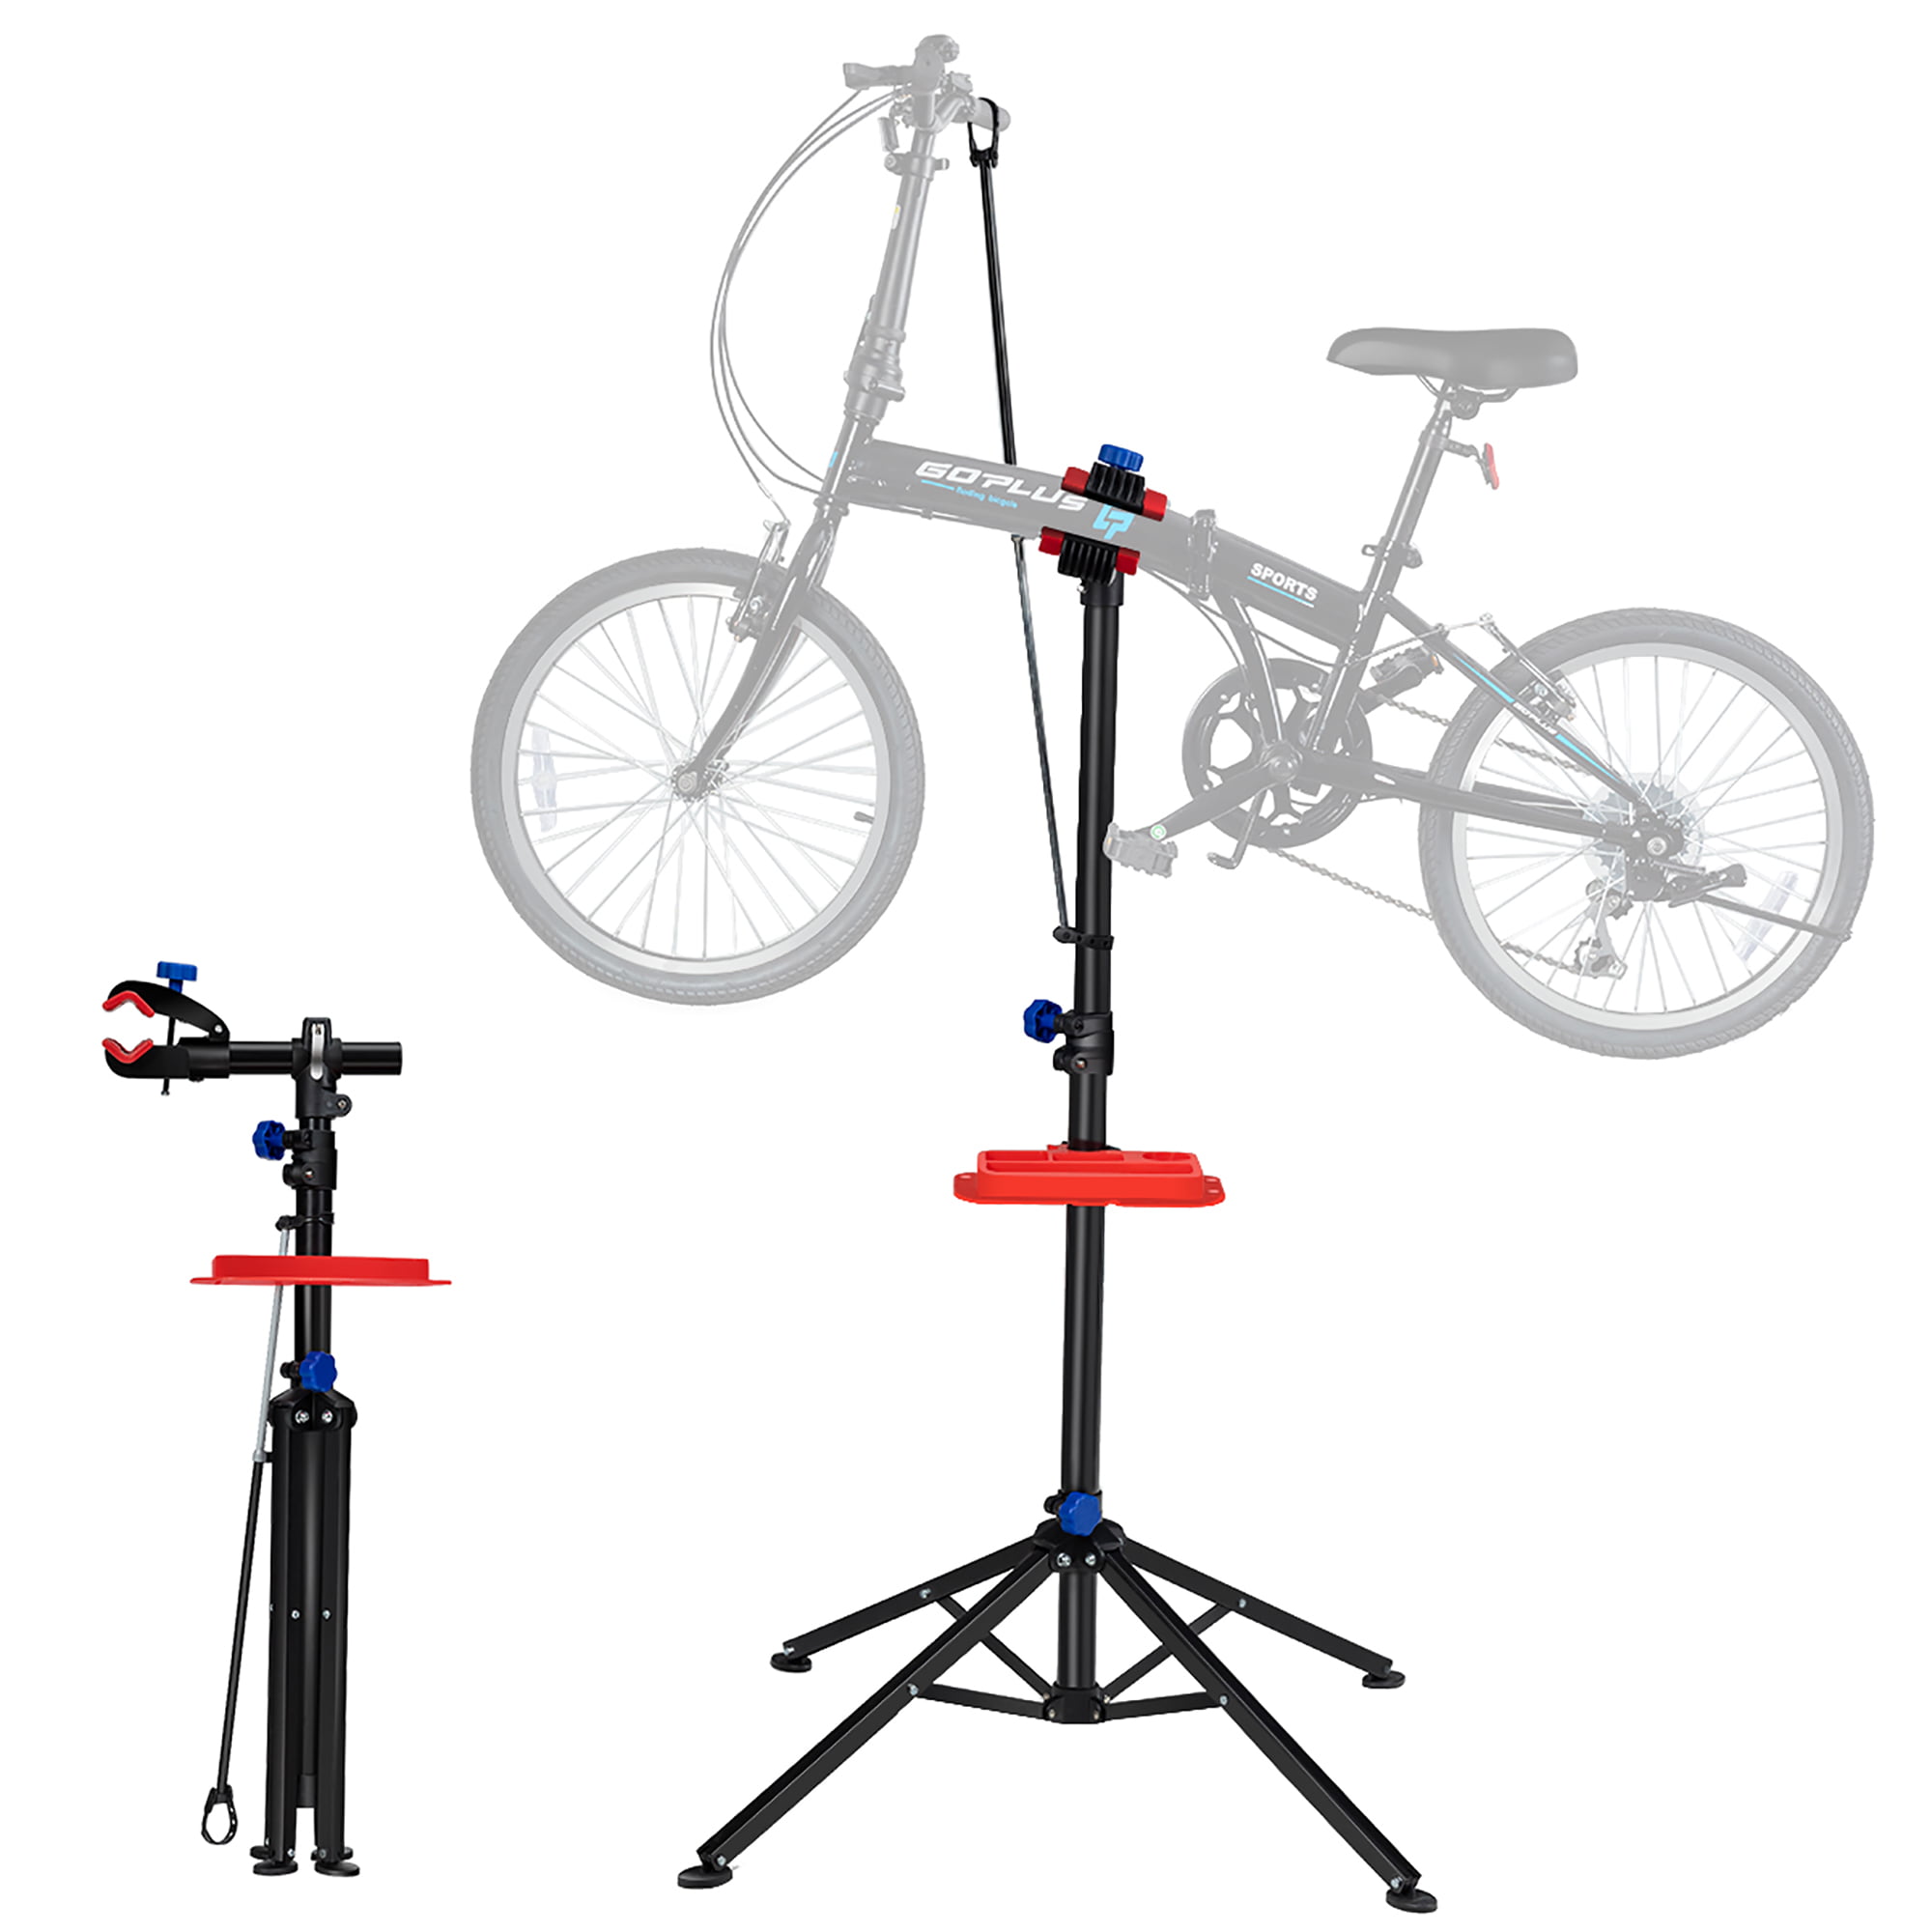 Adjustable Bicycle Bike Repair Stand Cycle Maintenance Mechanic Workstand Rack 